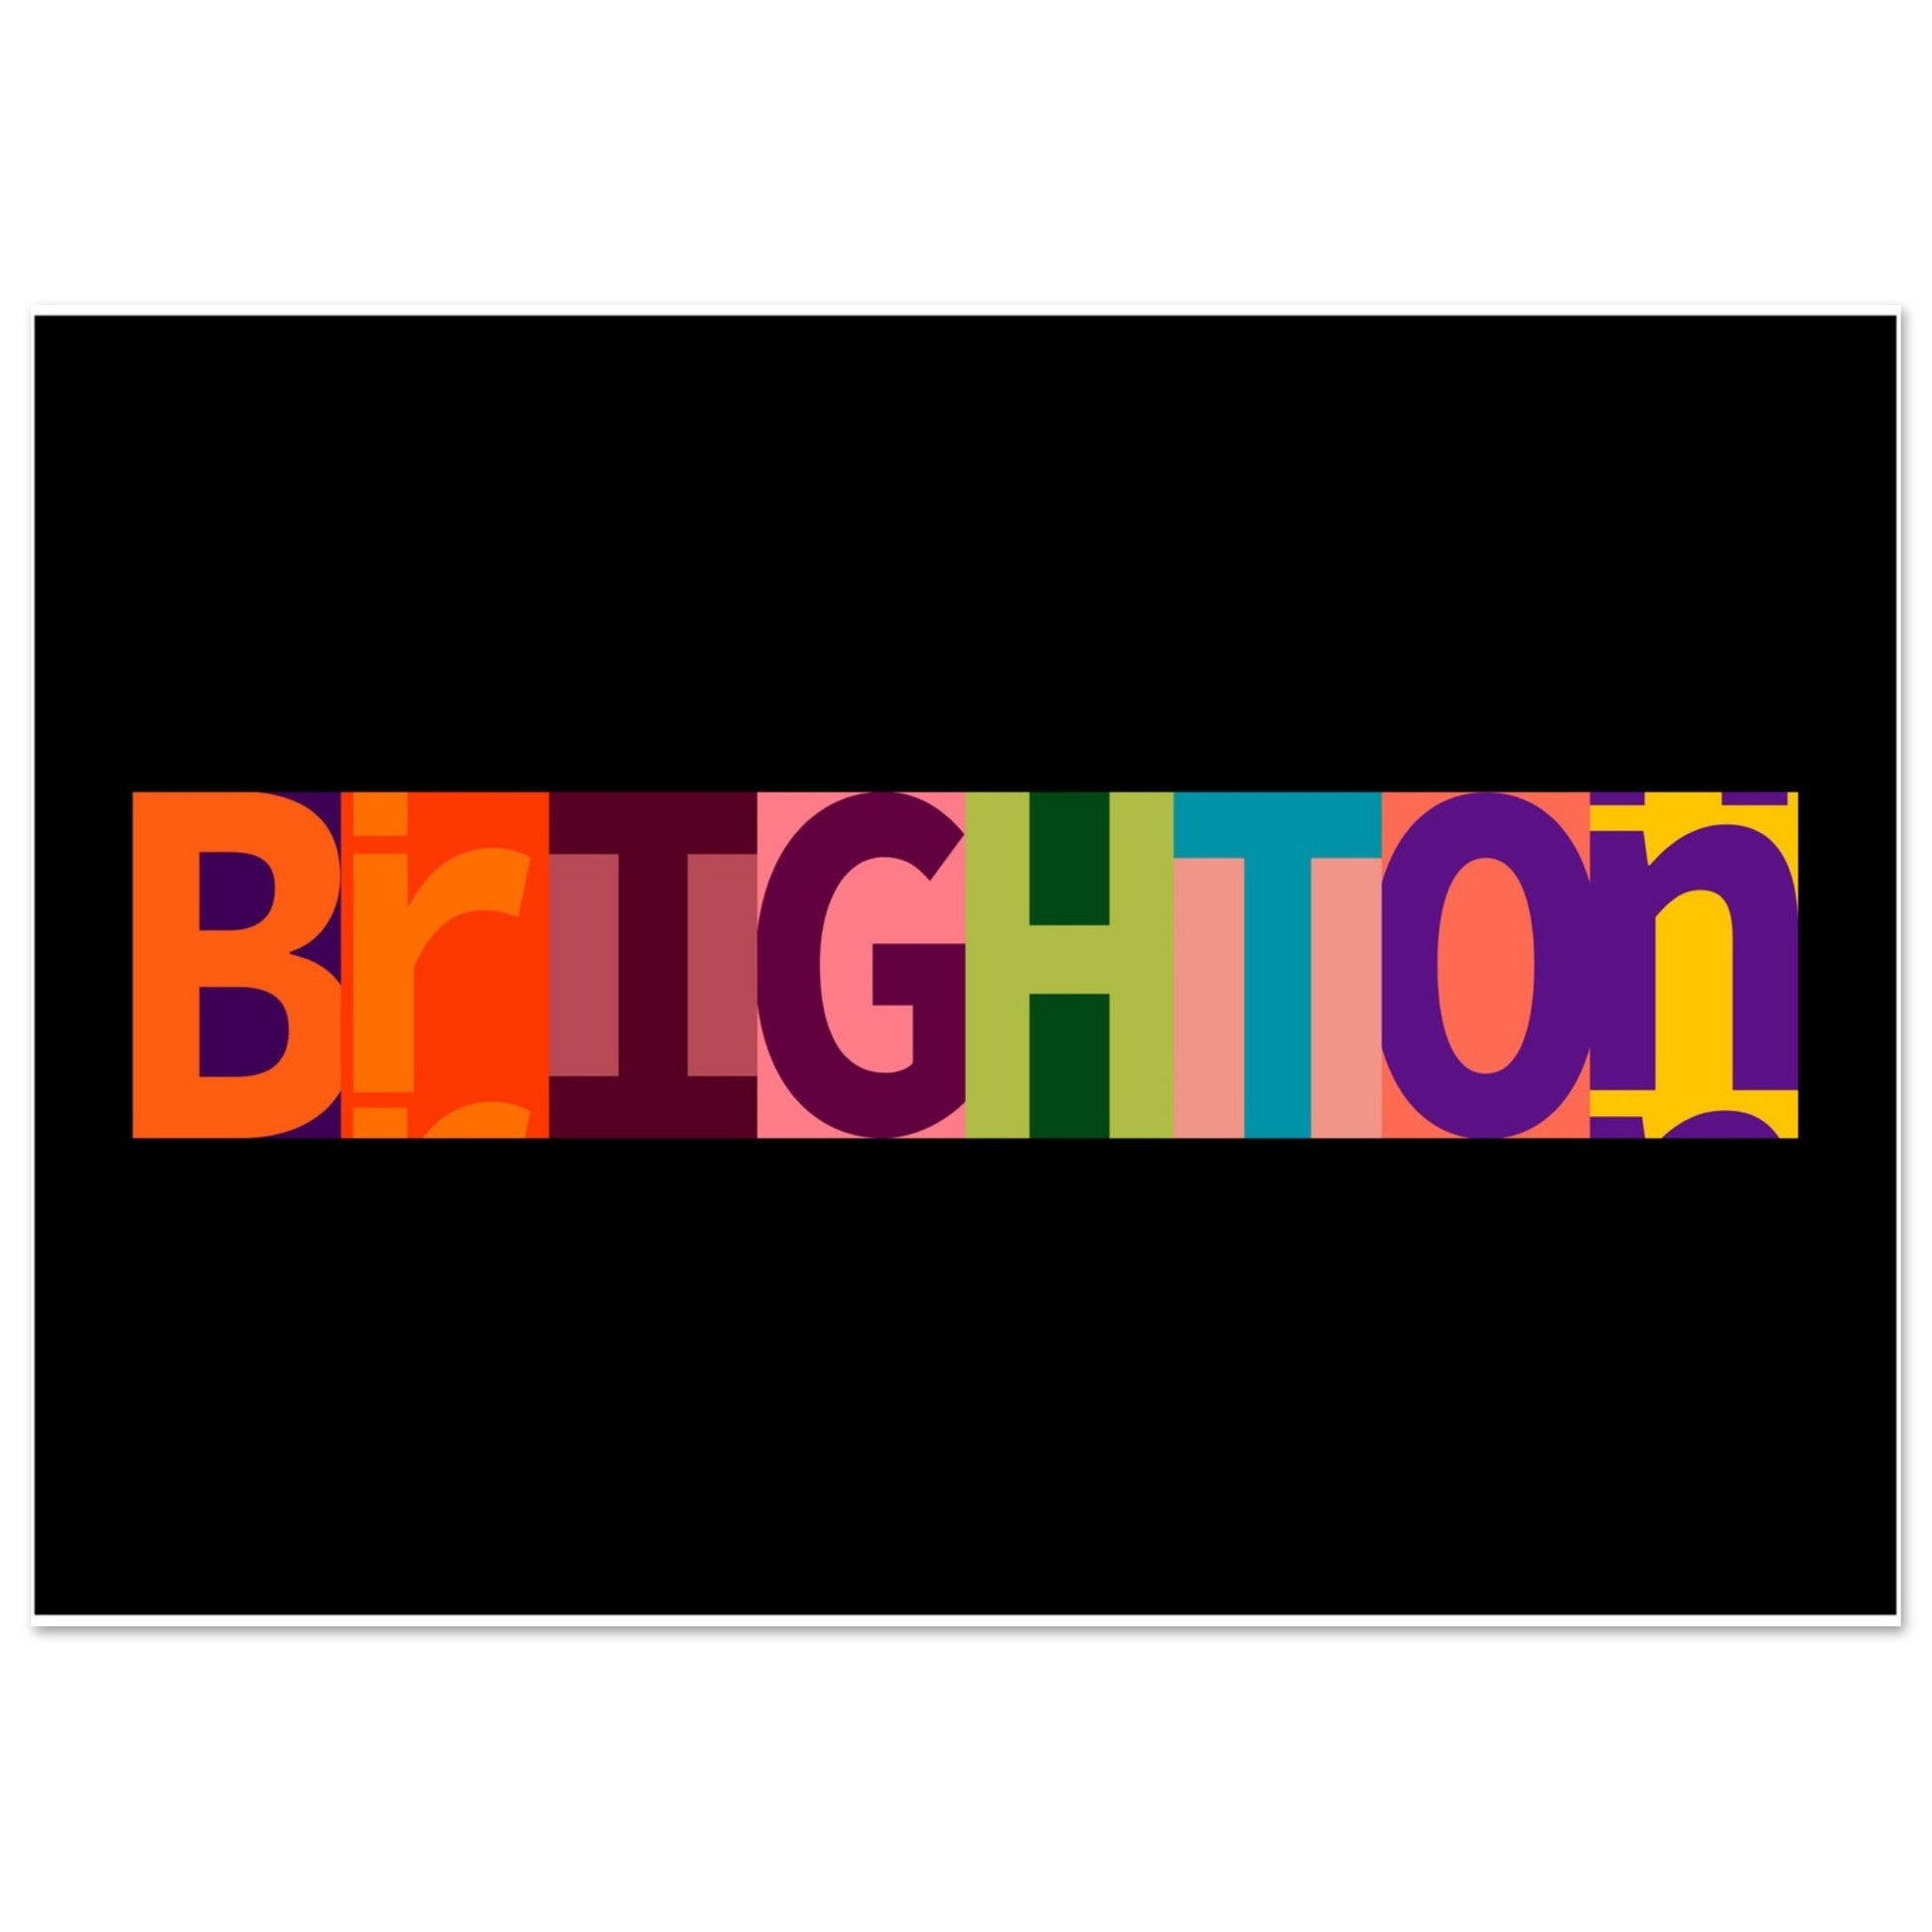 Brighton City Sign Print - Brighton, England, multicolor, Typography, , #illieeart